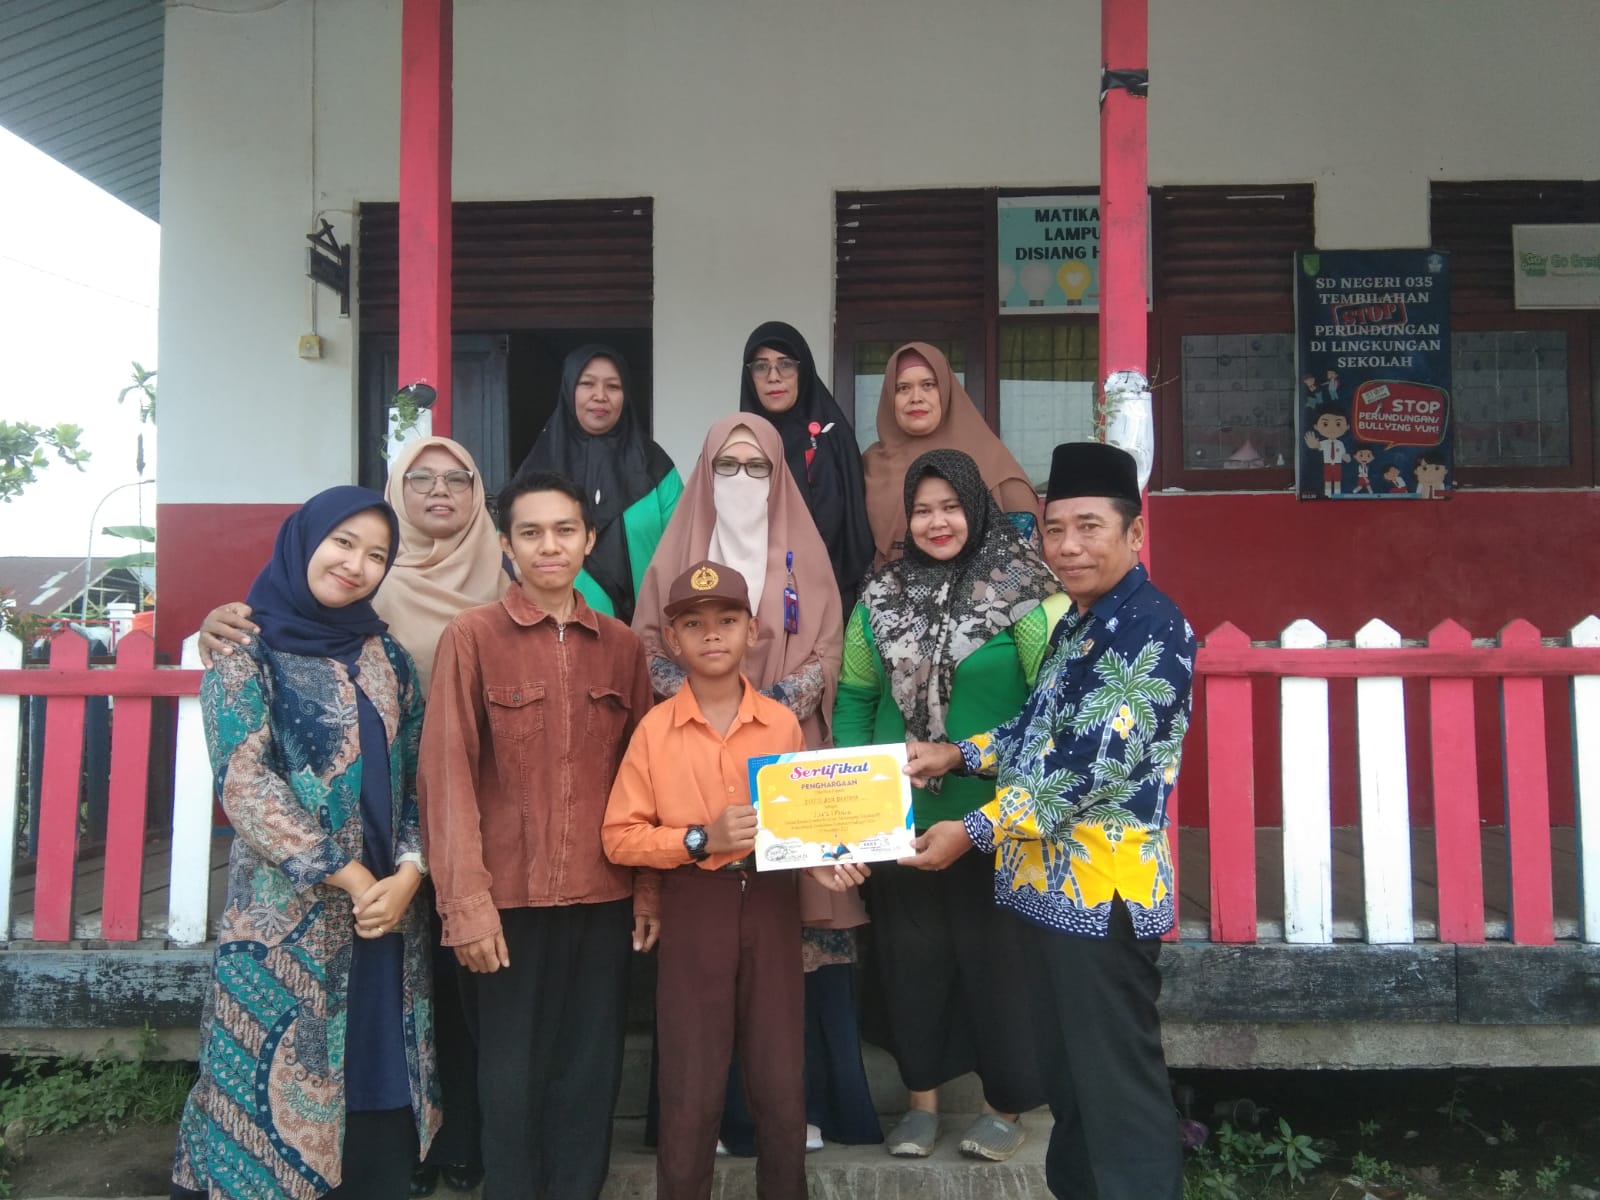 Bukti Aktfikan Literasi Sekolah, SDN 035 Tembilahan Rebut Juara 1 Mendongeng